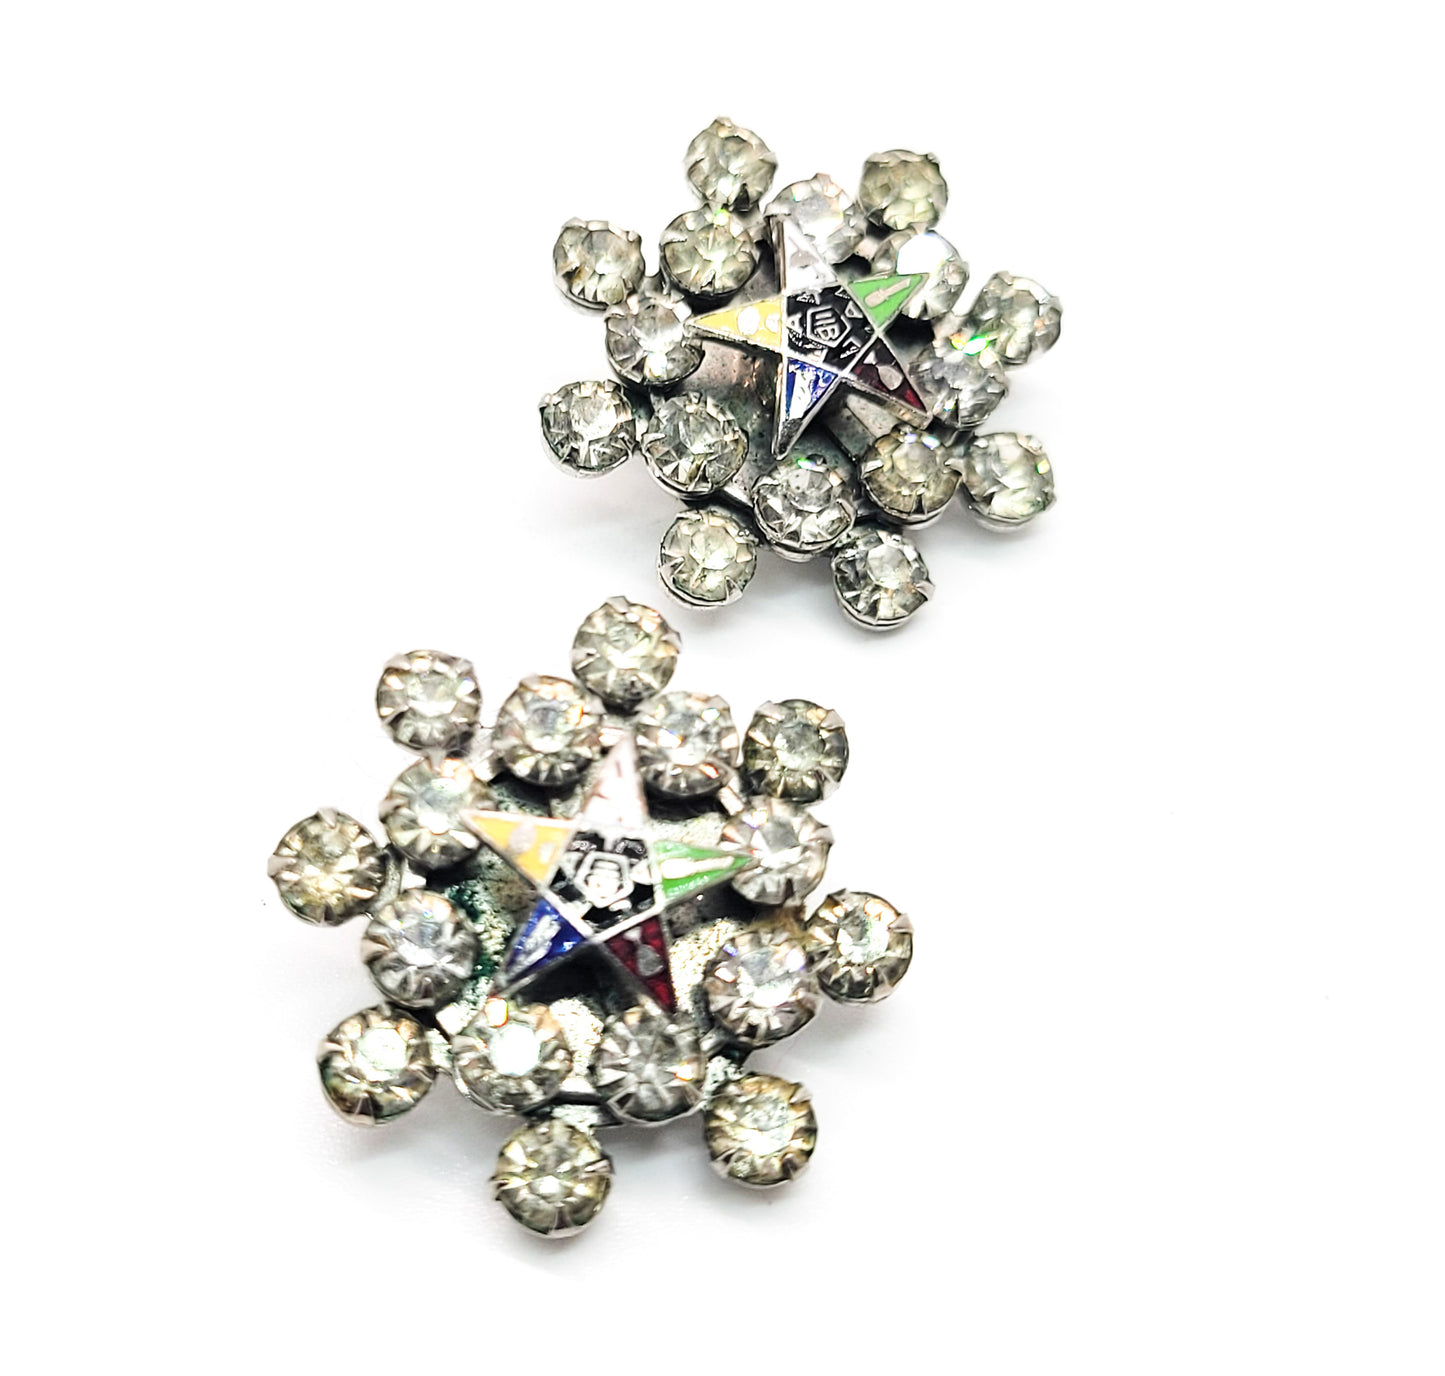 Order of the Eastern star enamel and clear rhinestone vintage clip on earrings